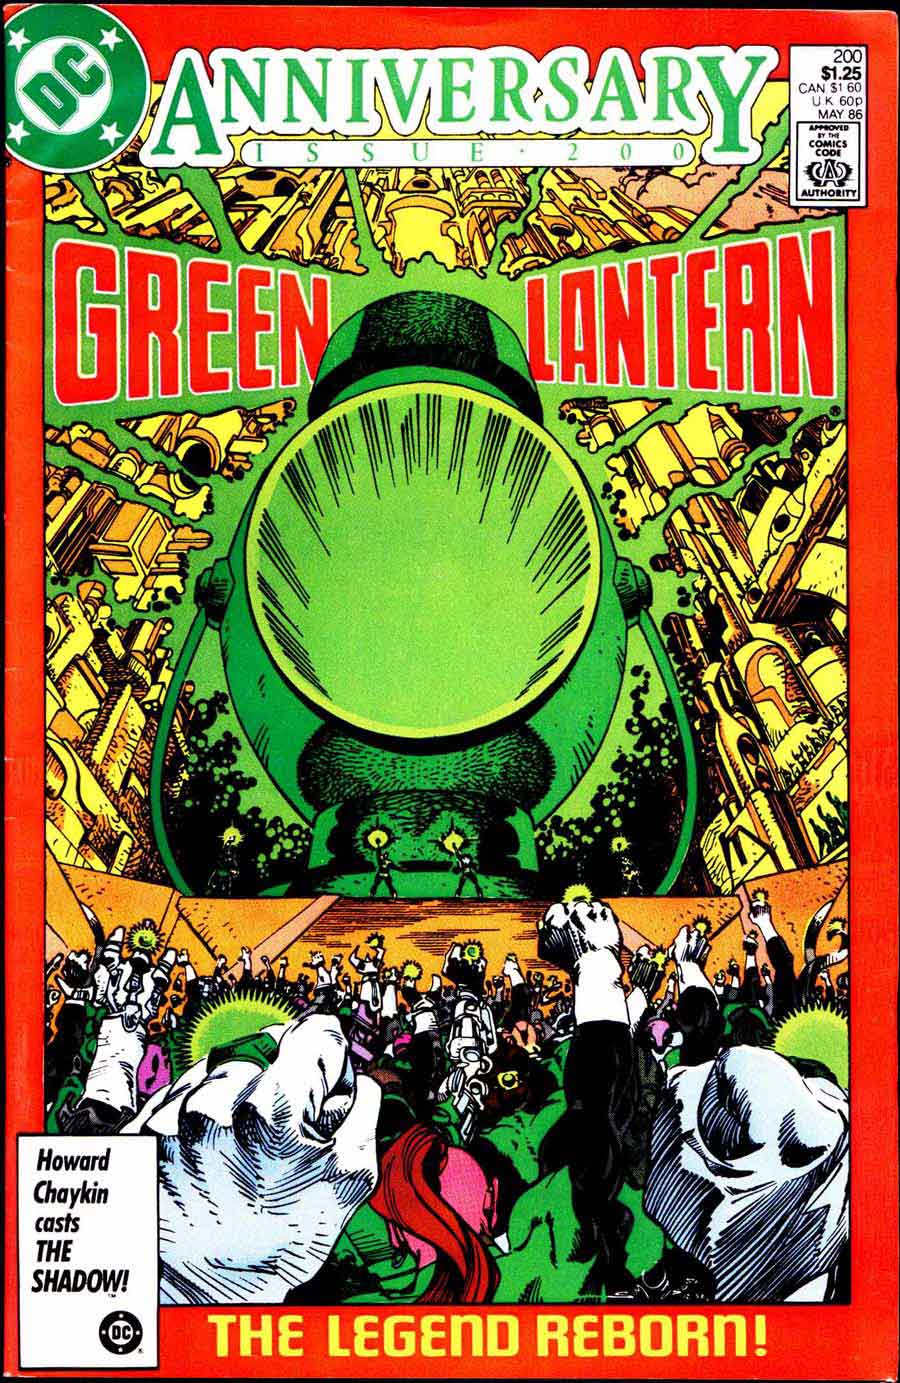 Green Lantern v2 #200 dc comic book cover art by Walt Simonson